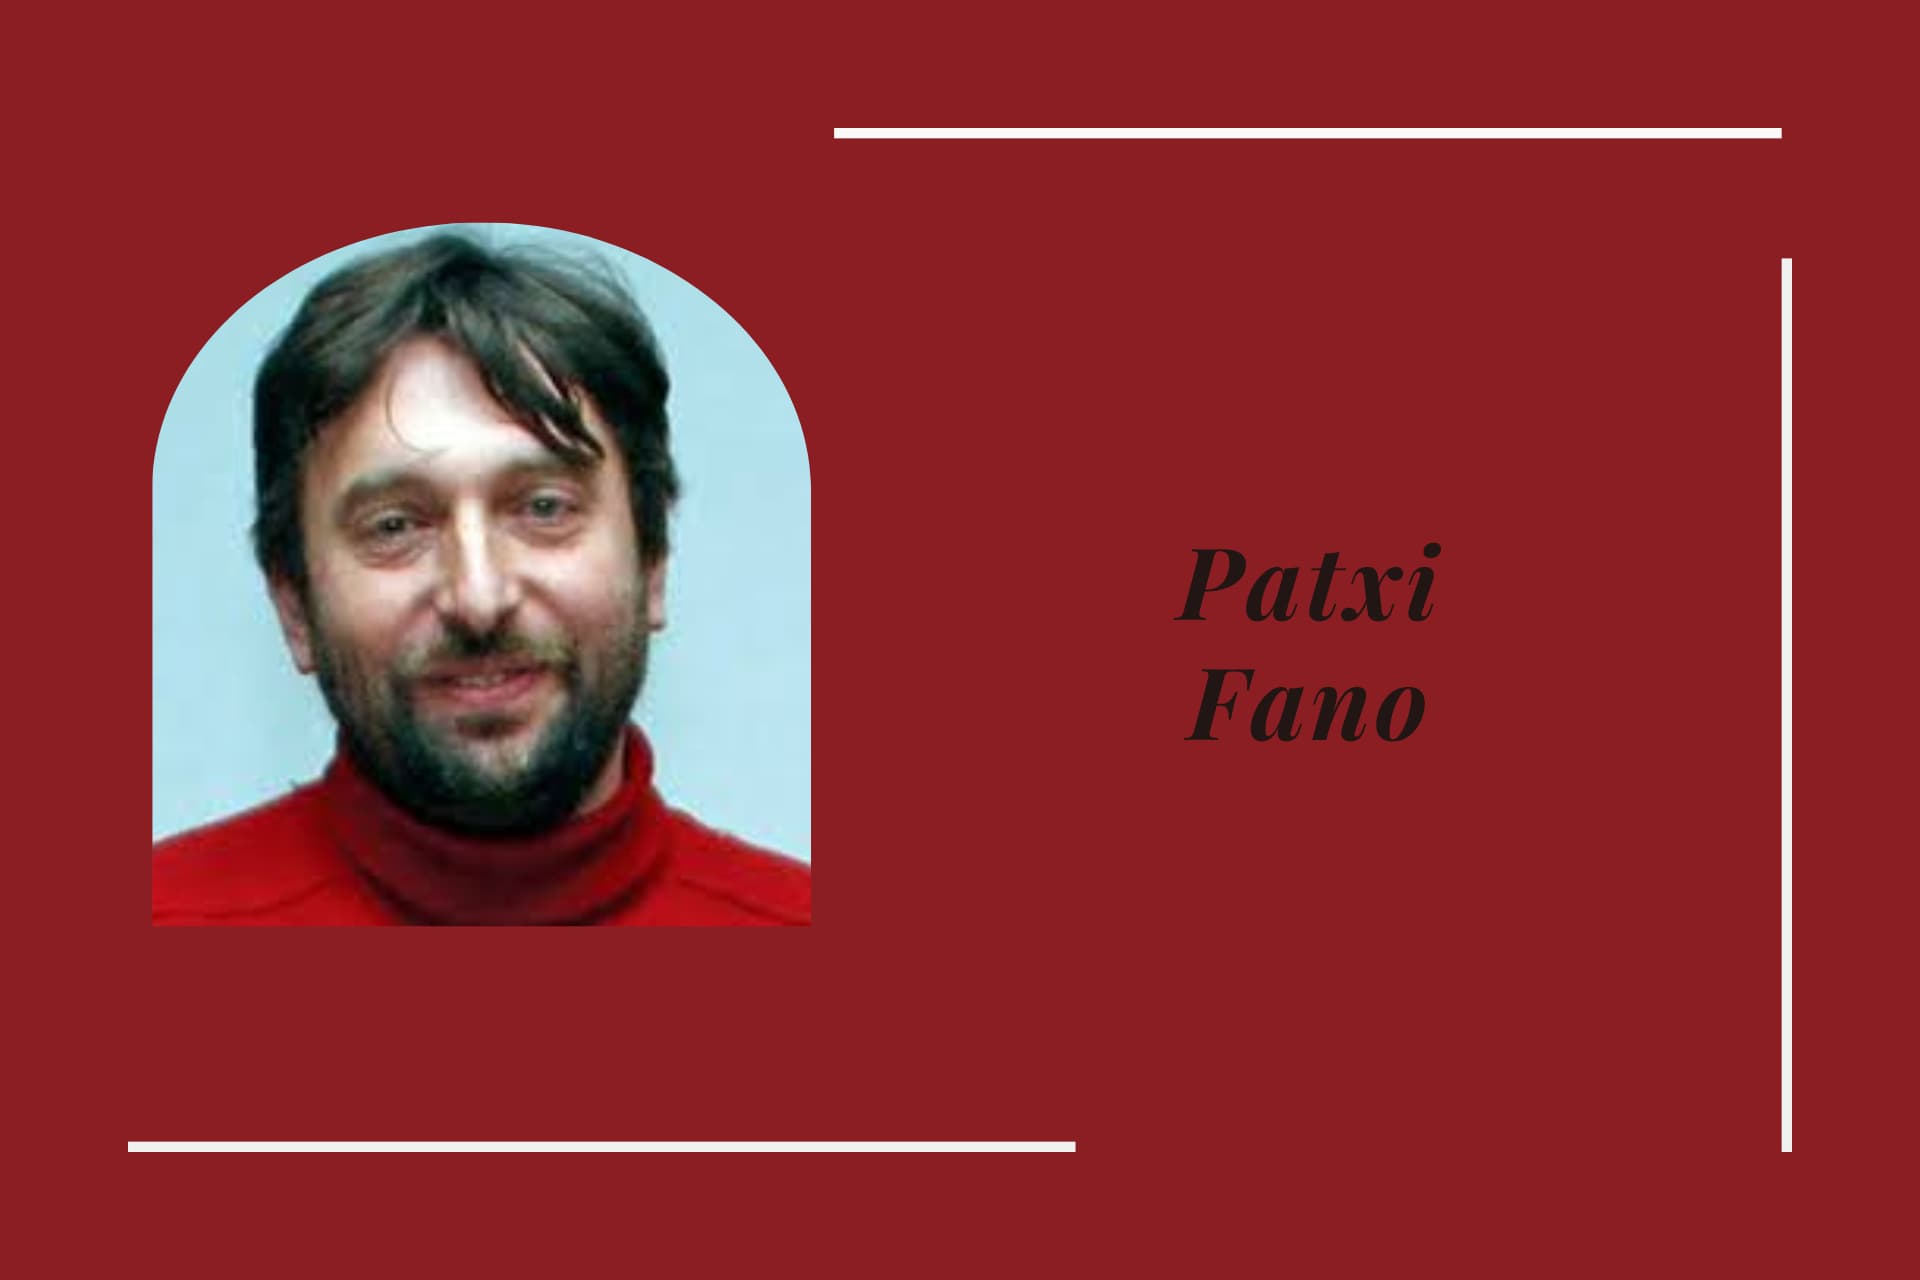 Patxi Fano